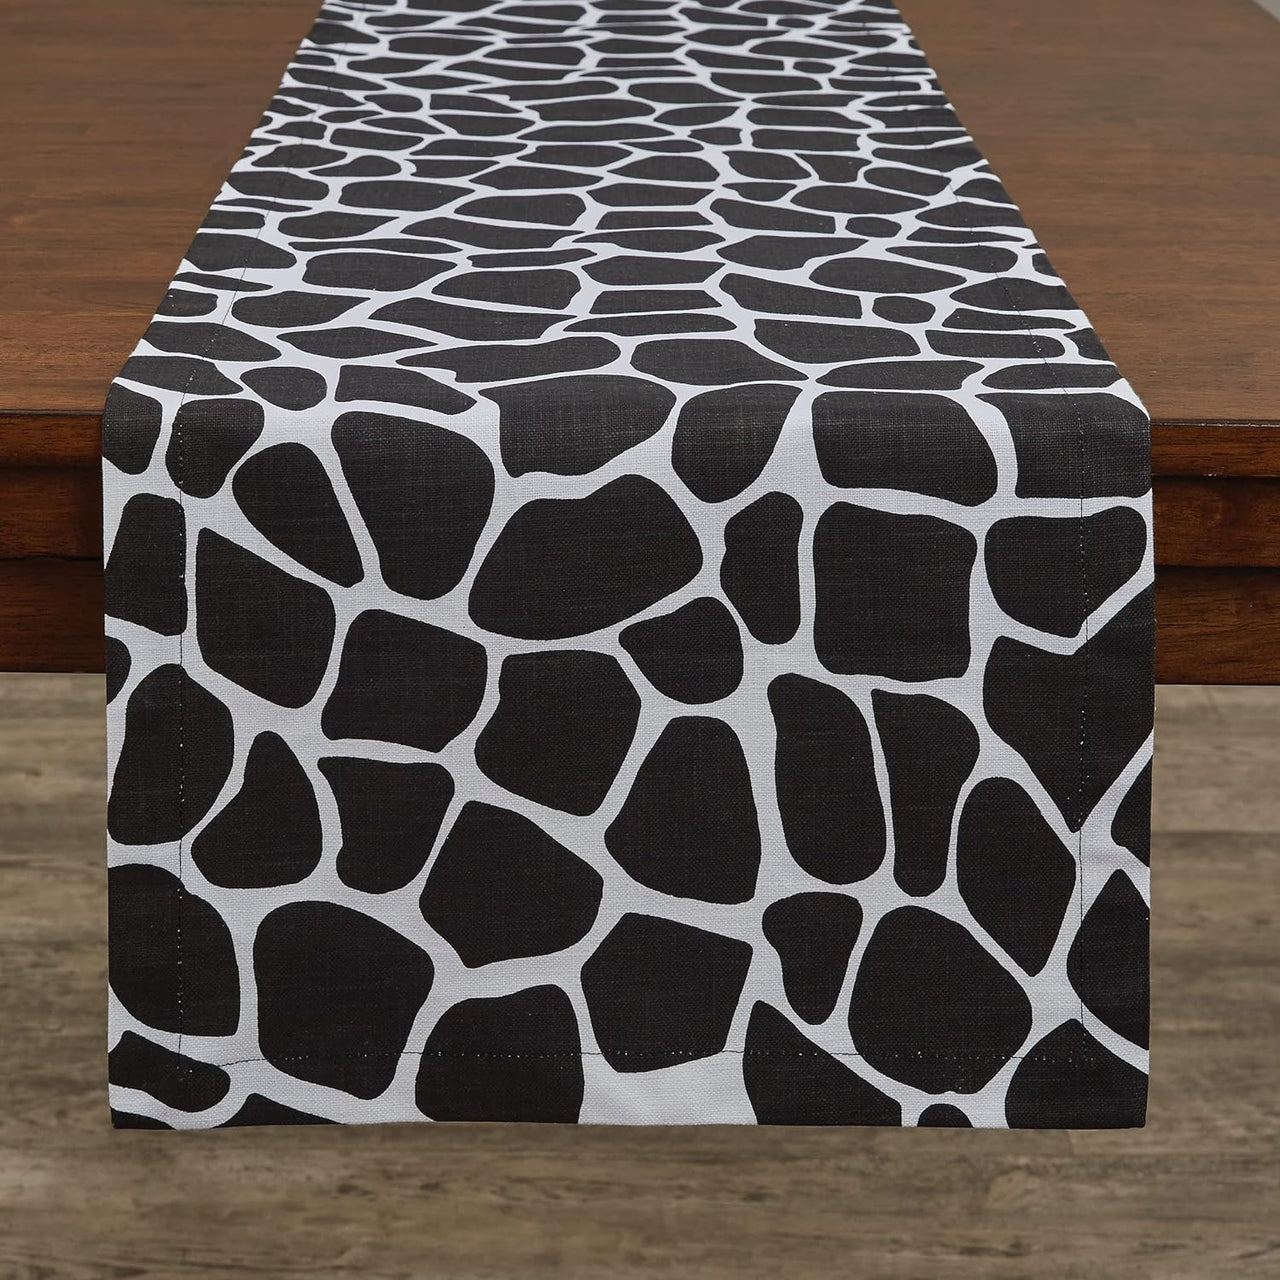 Giraffe Printed Table Runner 72"L - Black Park Designs